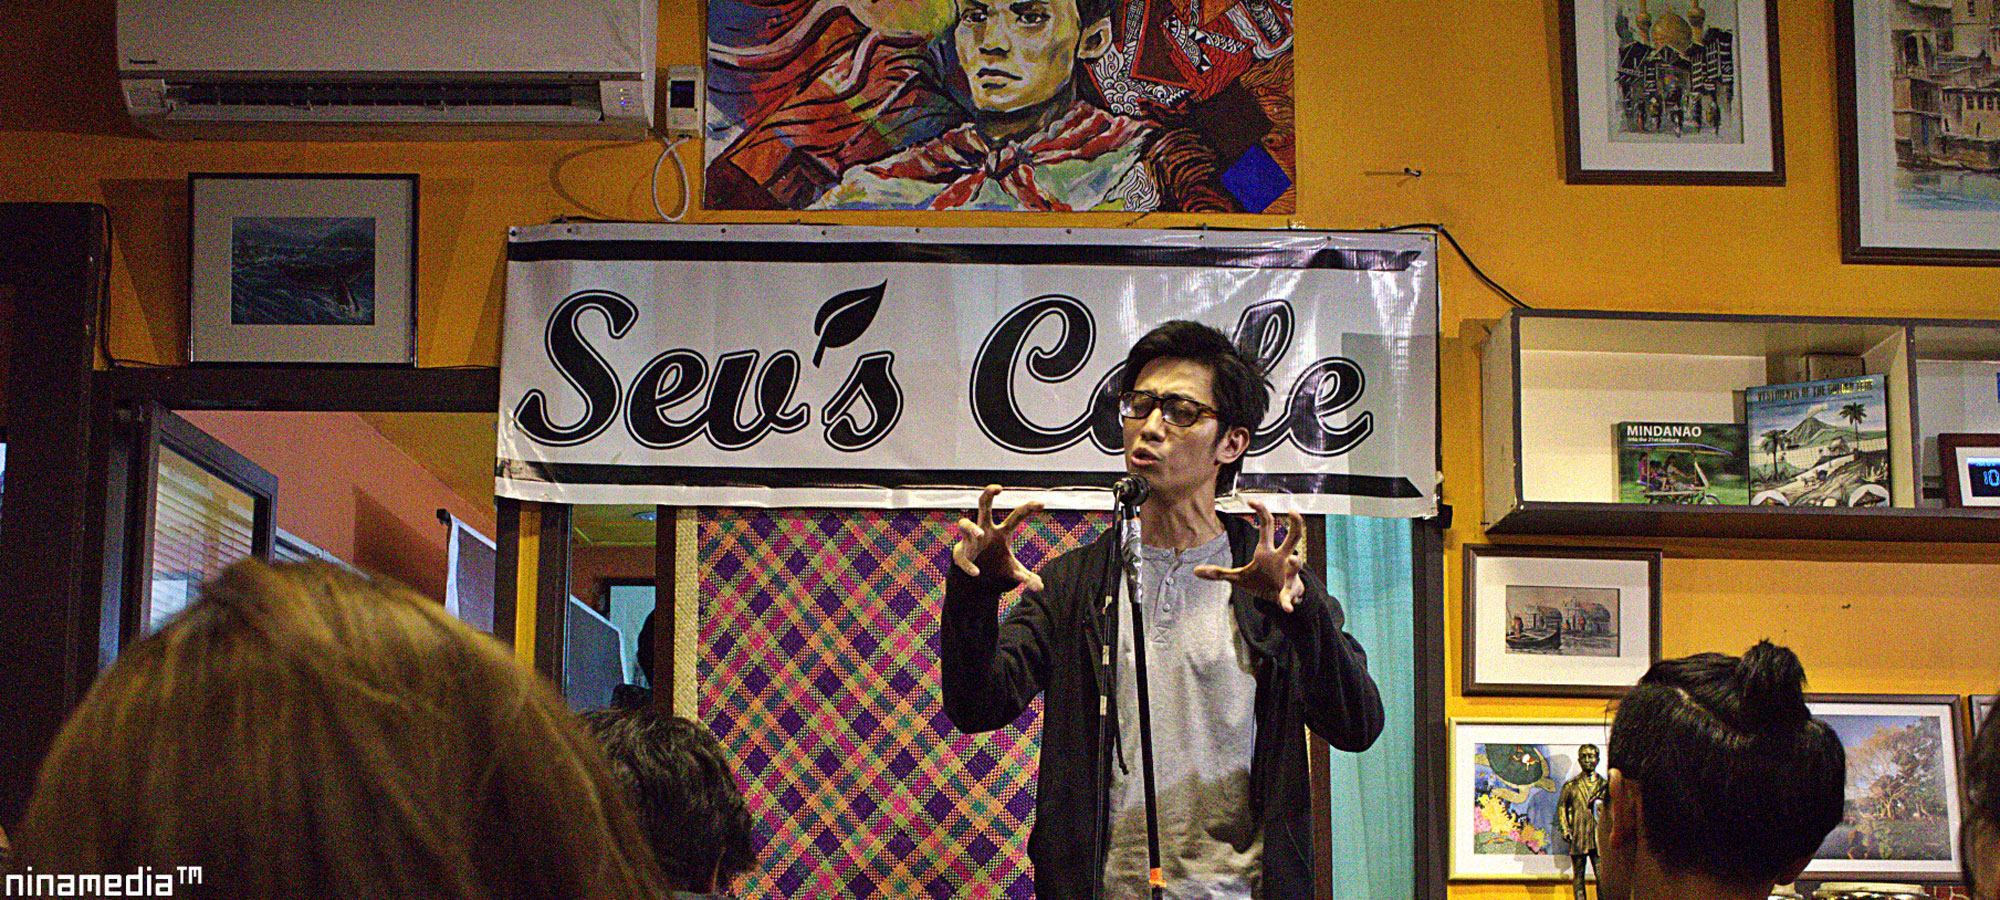 Growth Rocket John Berida performing spoken word at Sev’s Cafe